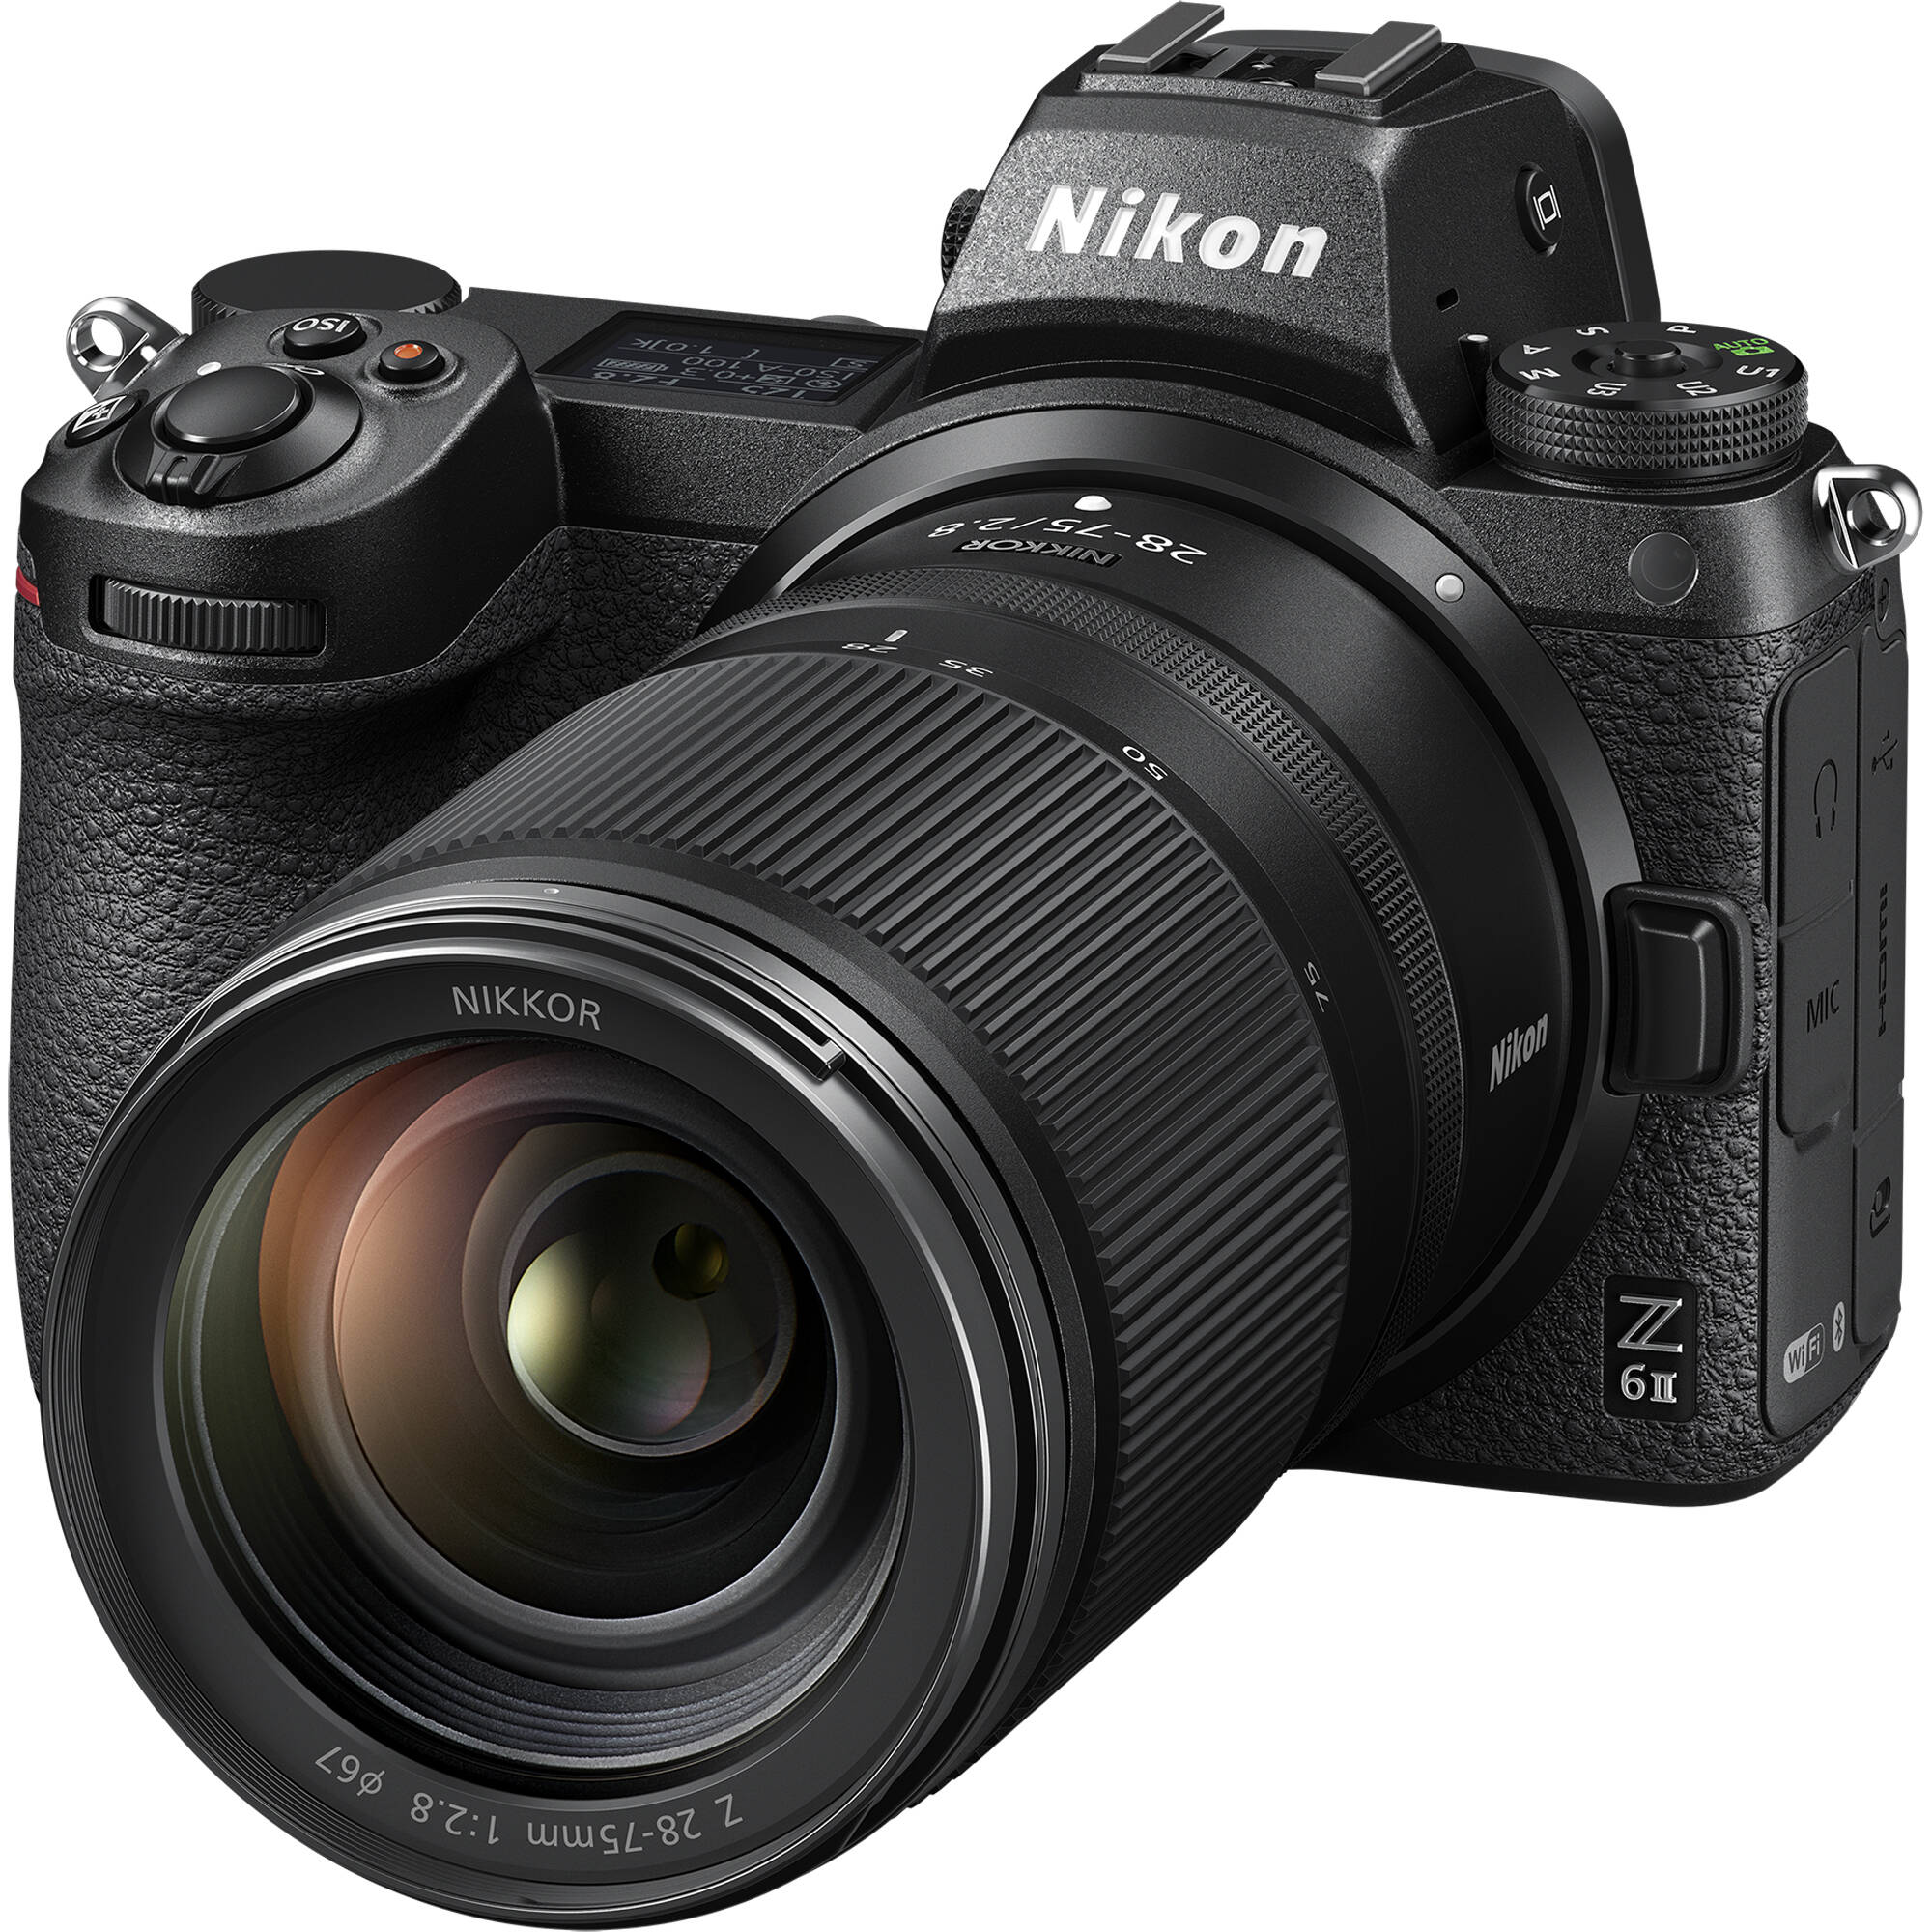 Nikon Z 28-75mm f/2.8 objektiv (JMA717DA)